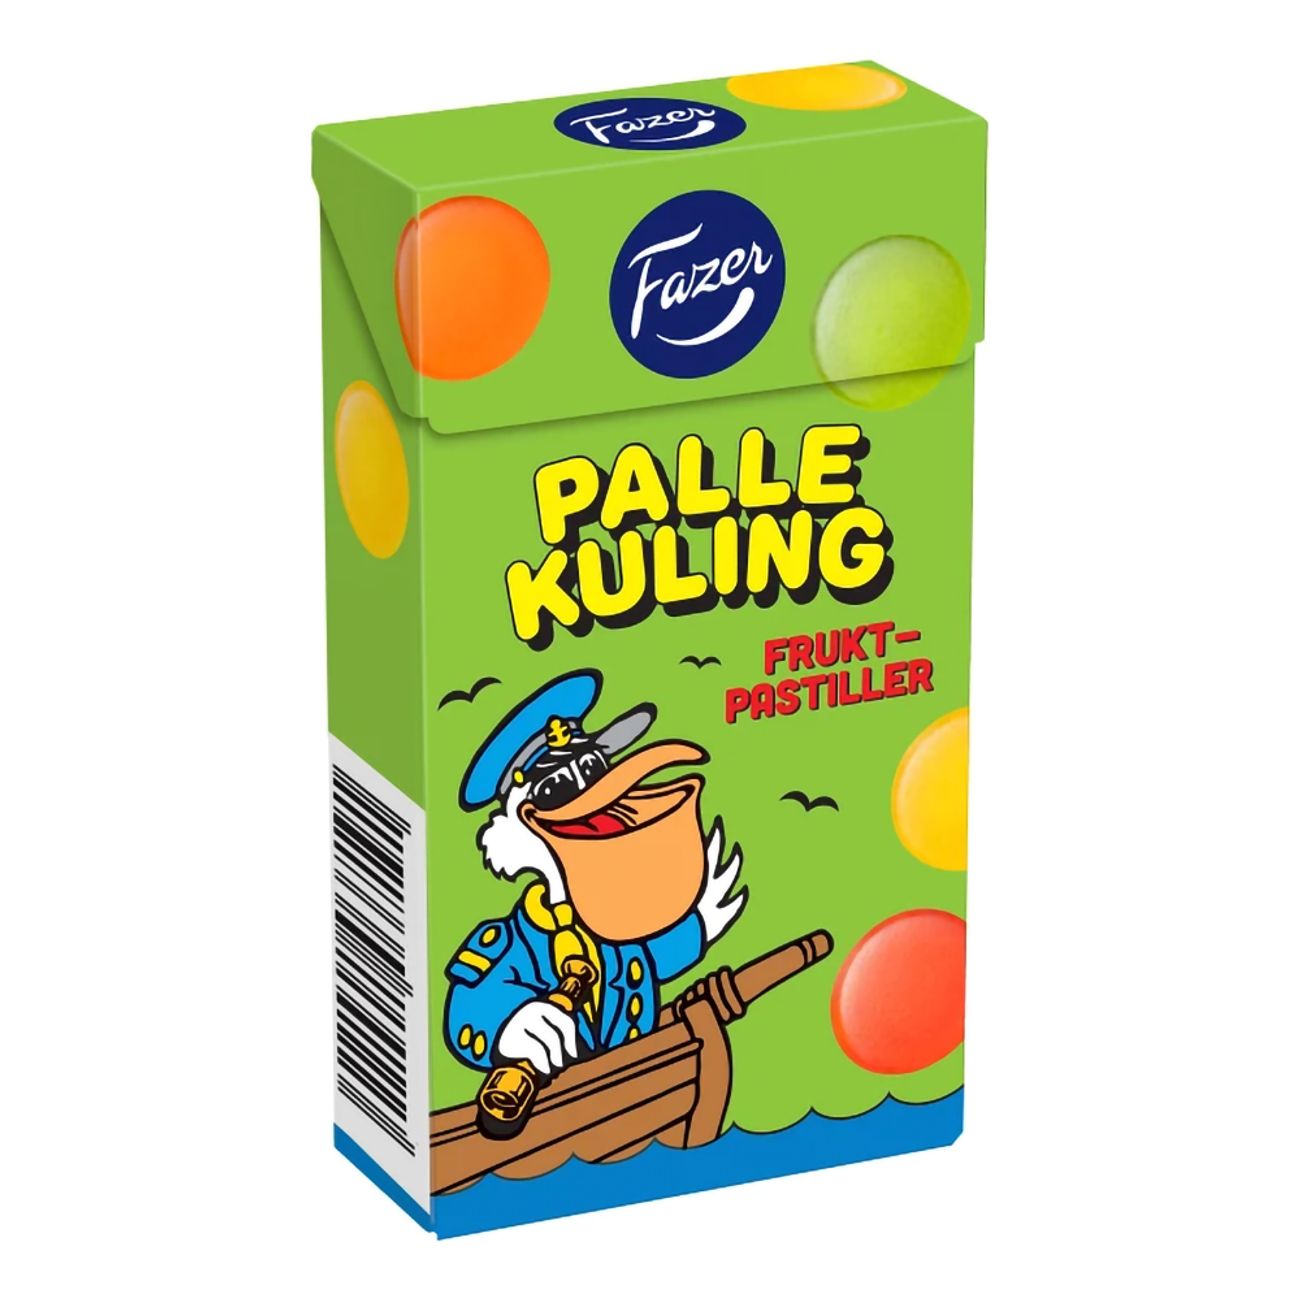 palle-kuling-tablettask-101745-1